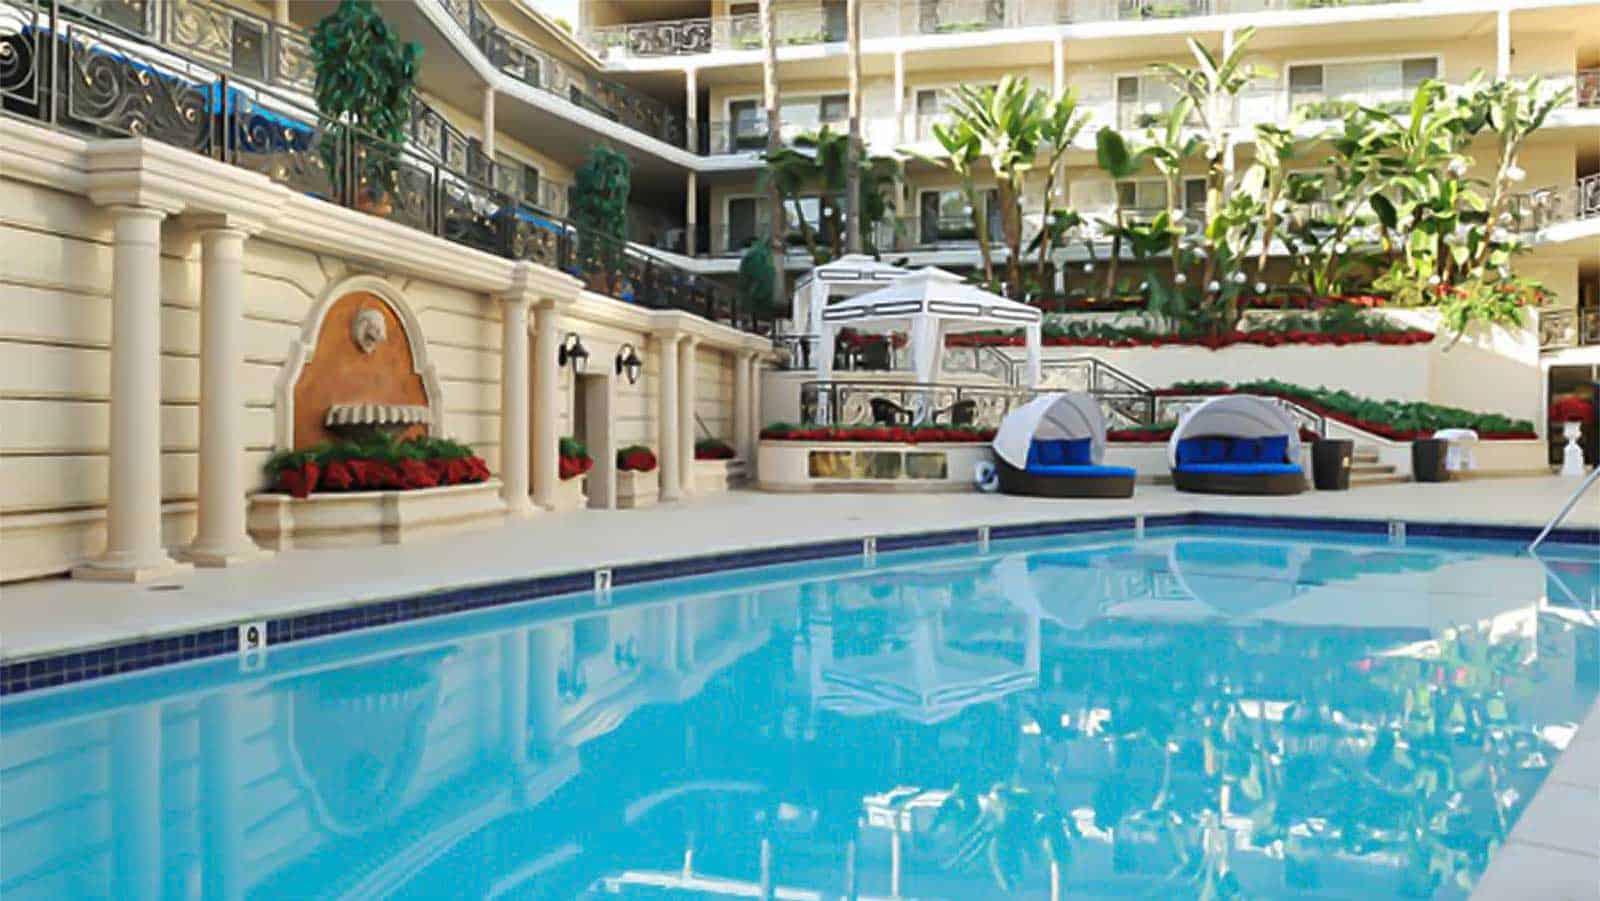 Beverly Hills Plaza Hotel in the Heart of the City #beverlyhills #hotels #bucketlist #plazahotel #luxuryhotels #vacation #losangeles #beverlyhillsmagazine #bevhillsmag 